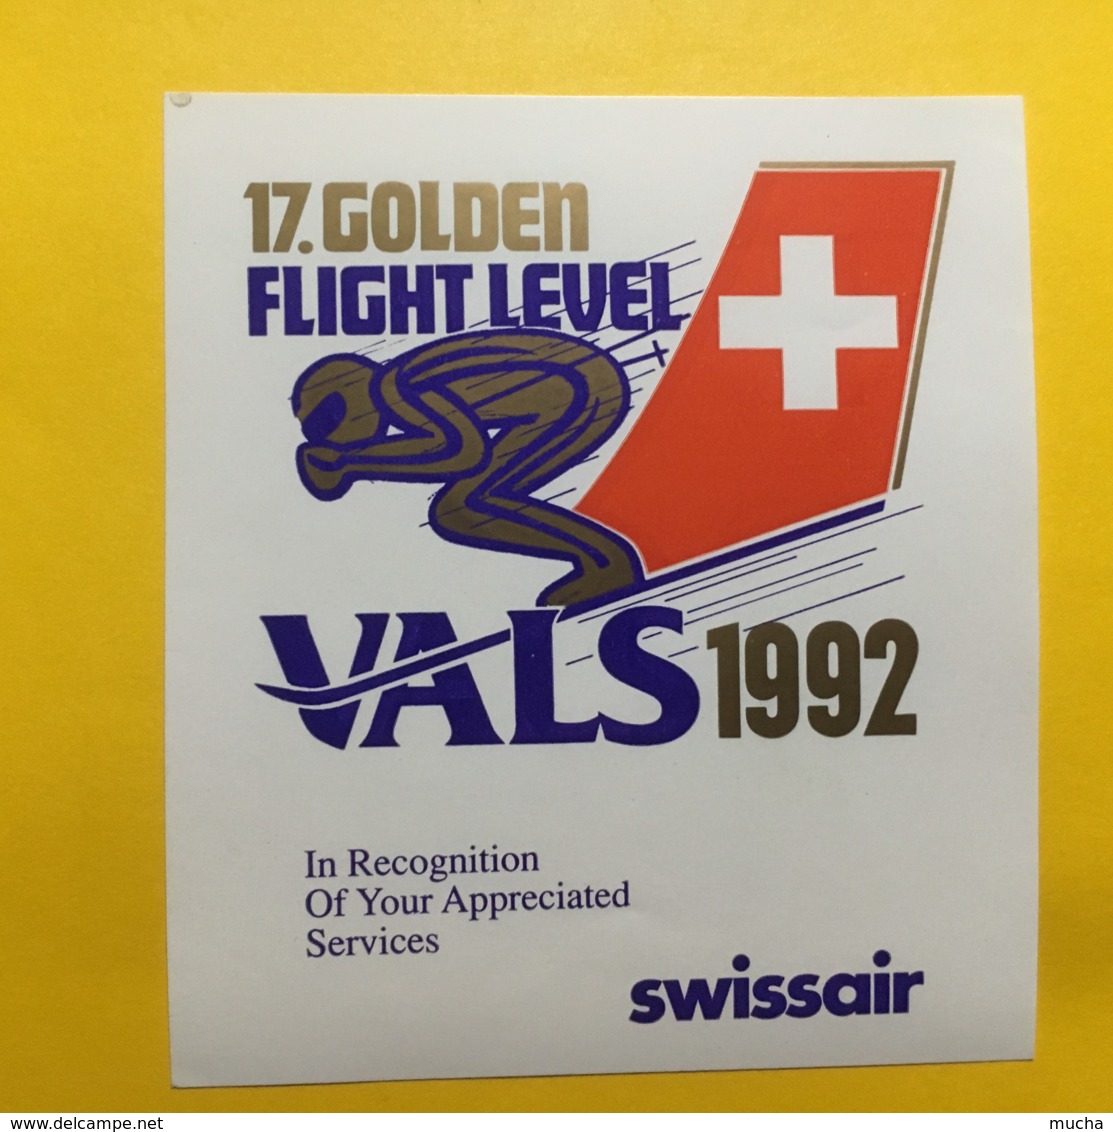 9036 - 17.Golden Flight Level Vals 1992  Swissair - Ski